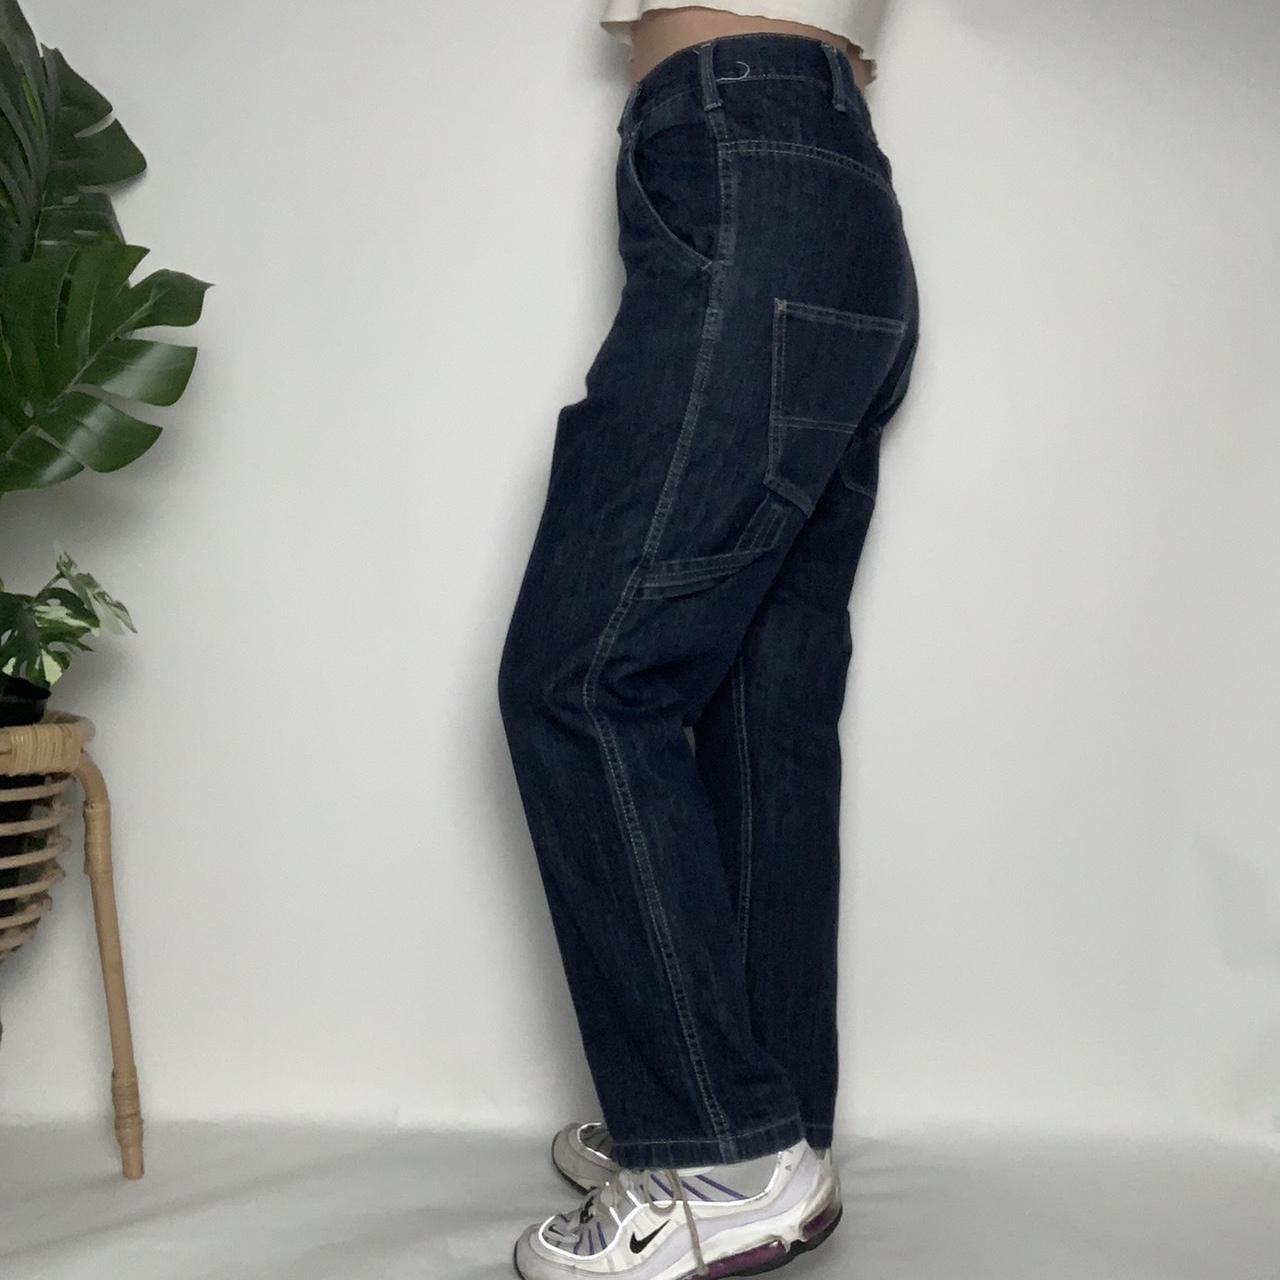 Vintage 90s deadstock rapper style dark wash cargo jeans